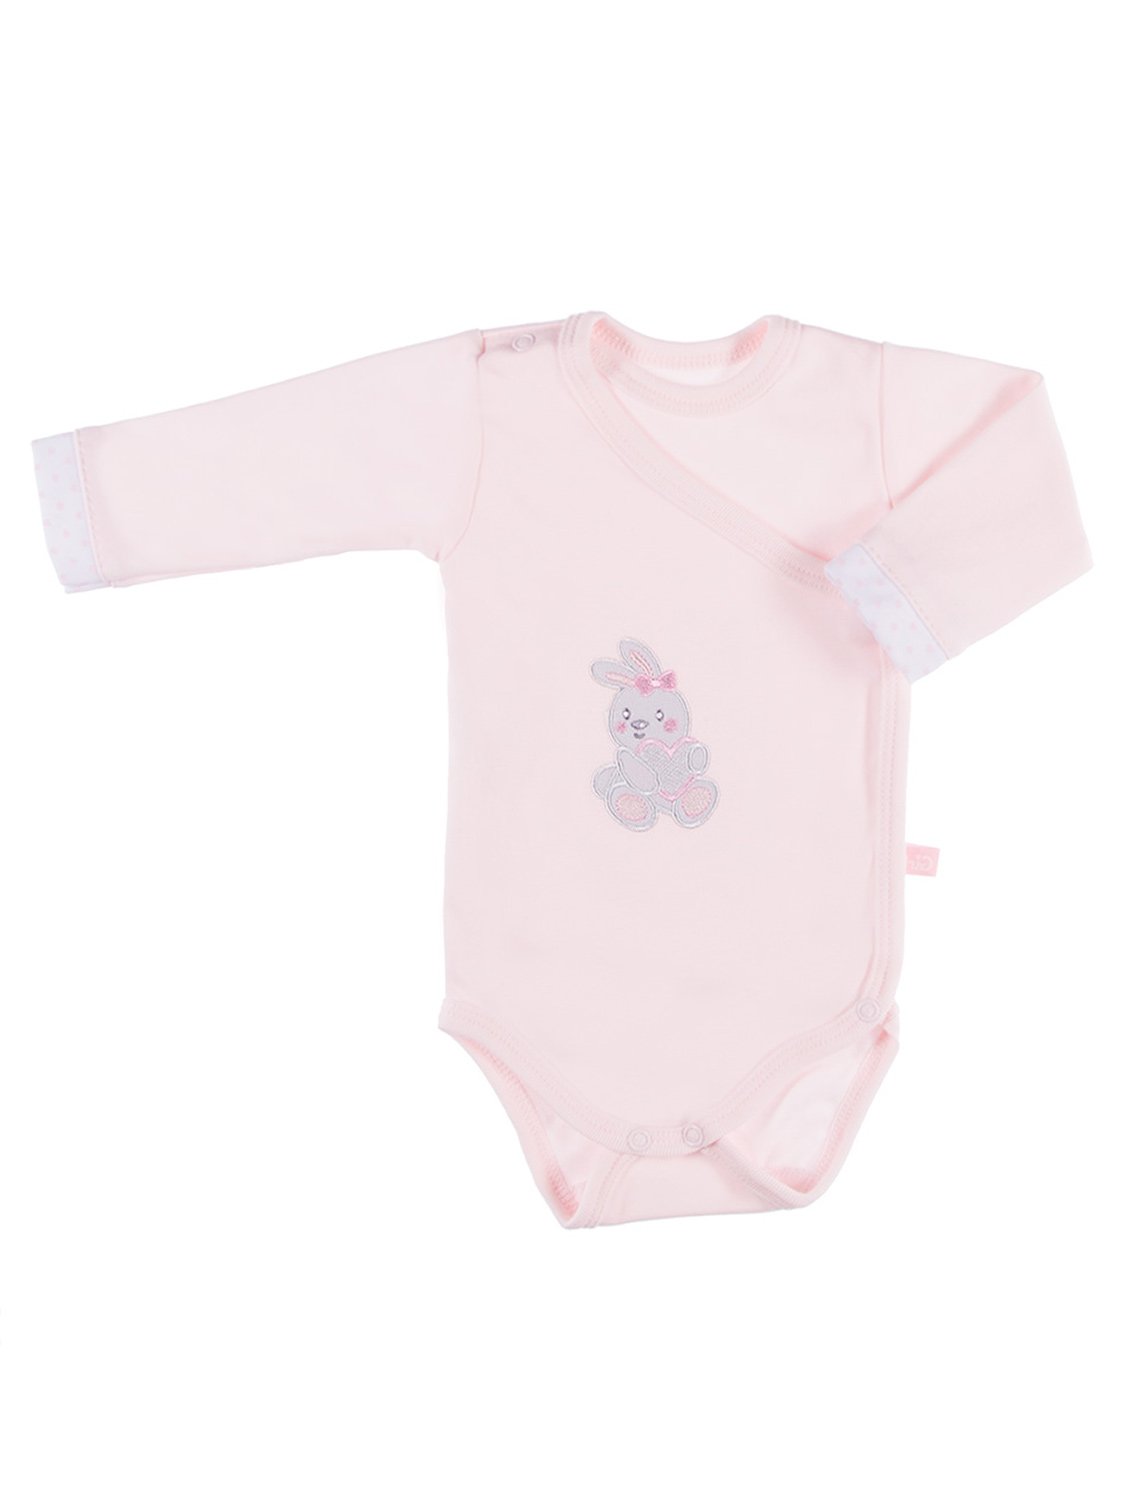 Early Baby Bodysuit, Embroidered Bunny Rabbit Design - Pink - Bodysuit / Vest - EEVI